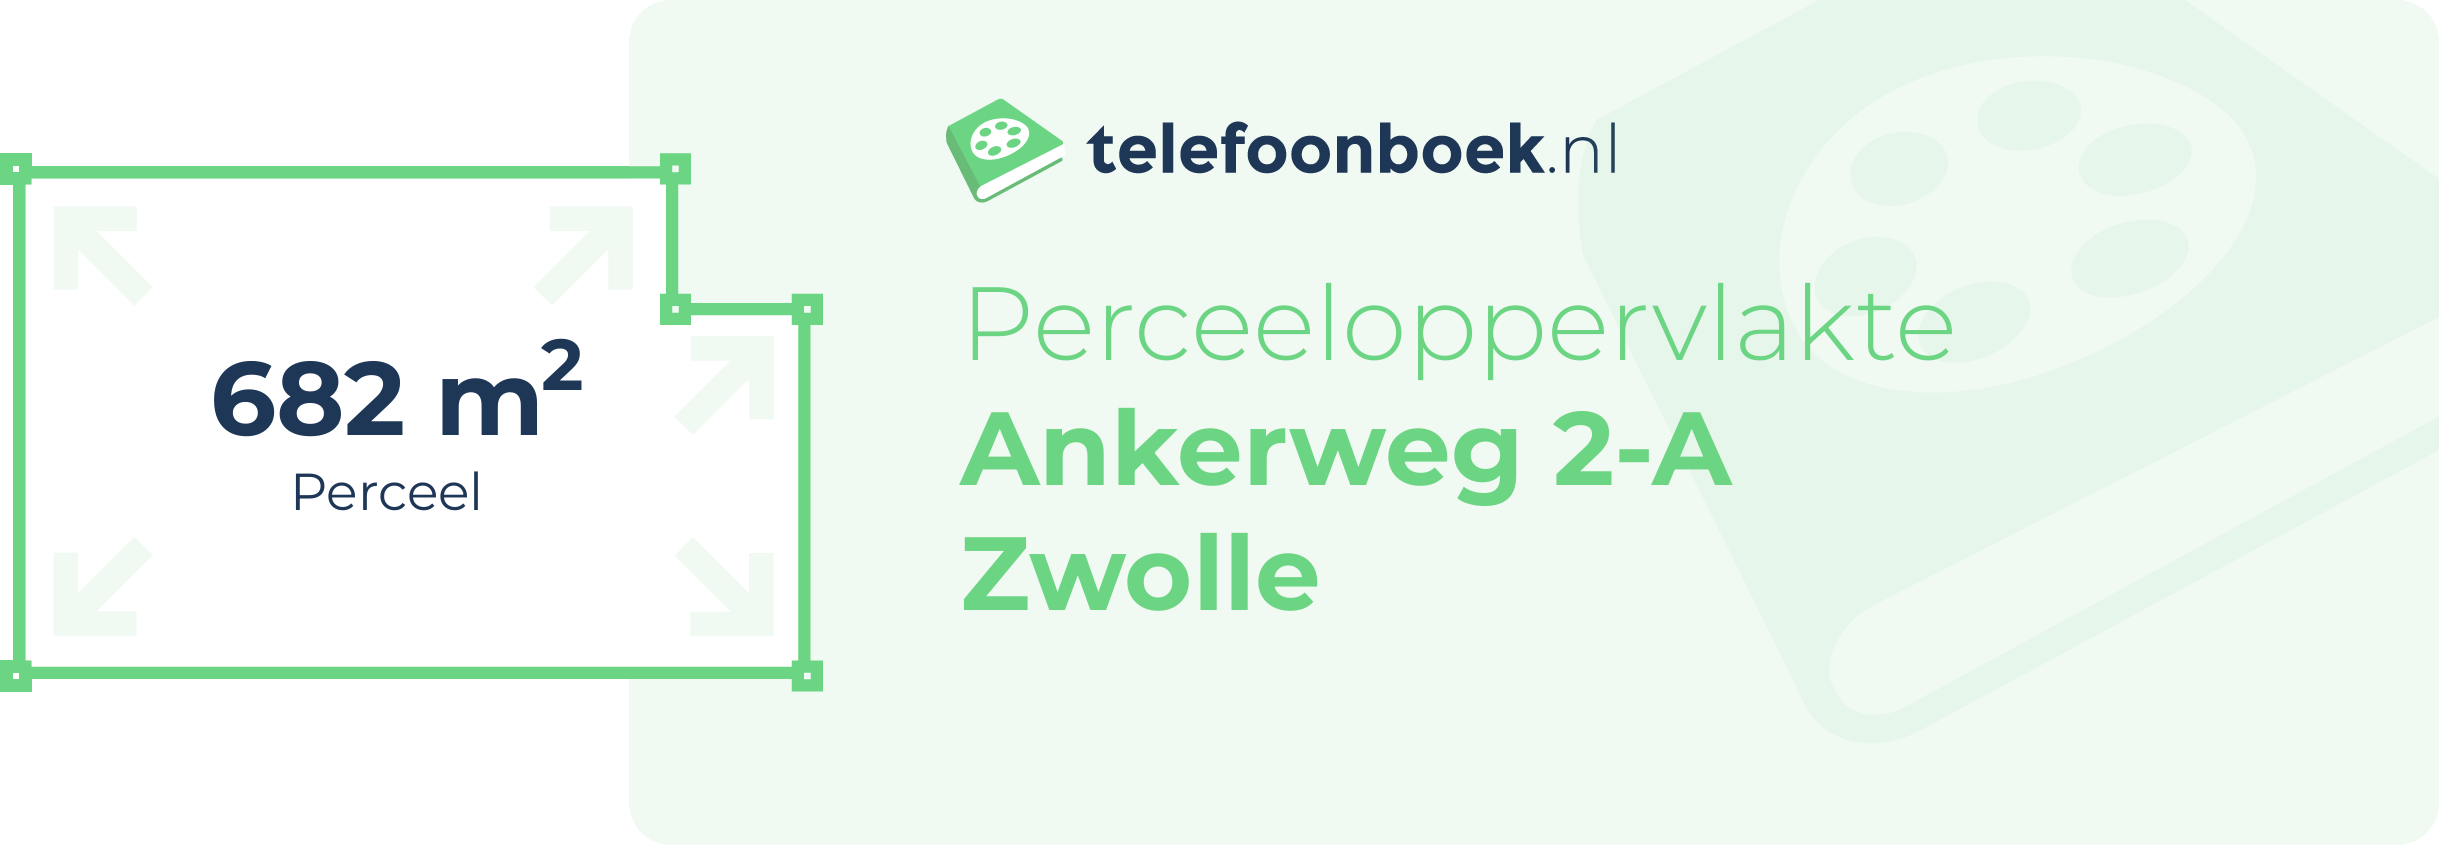 Perceeloppervlakte Ankerweg 2-A Zwolle